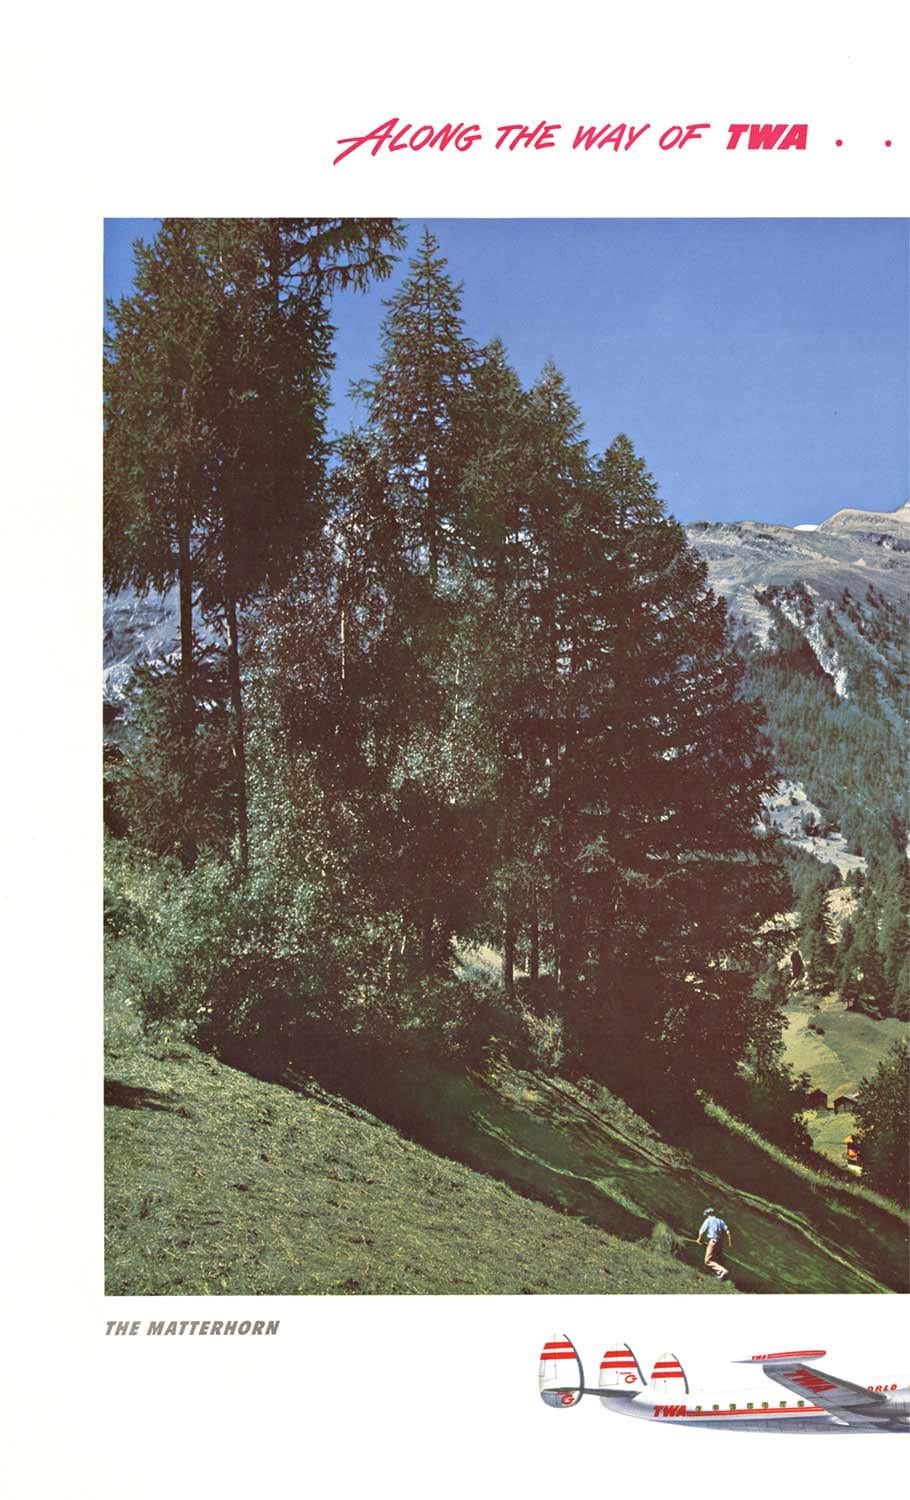 Original Matterhorn, , Along the way of TWA ... Switzerland, vintage poster - Print by Unknown